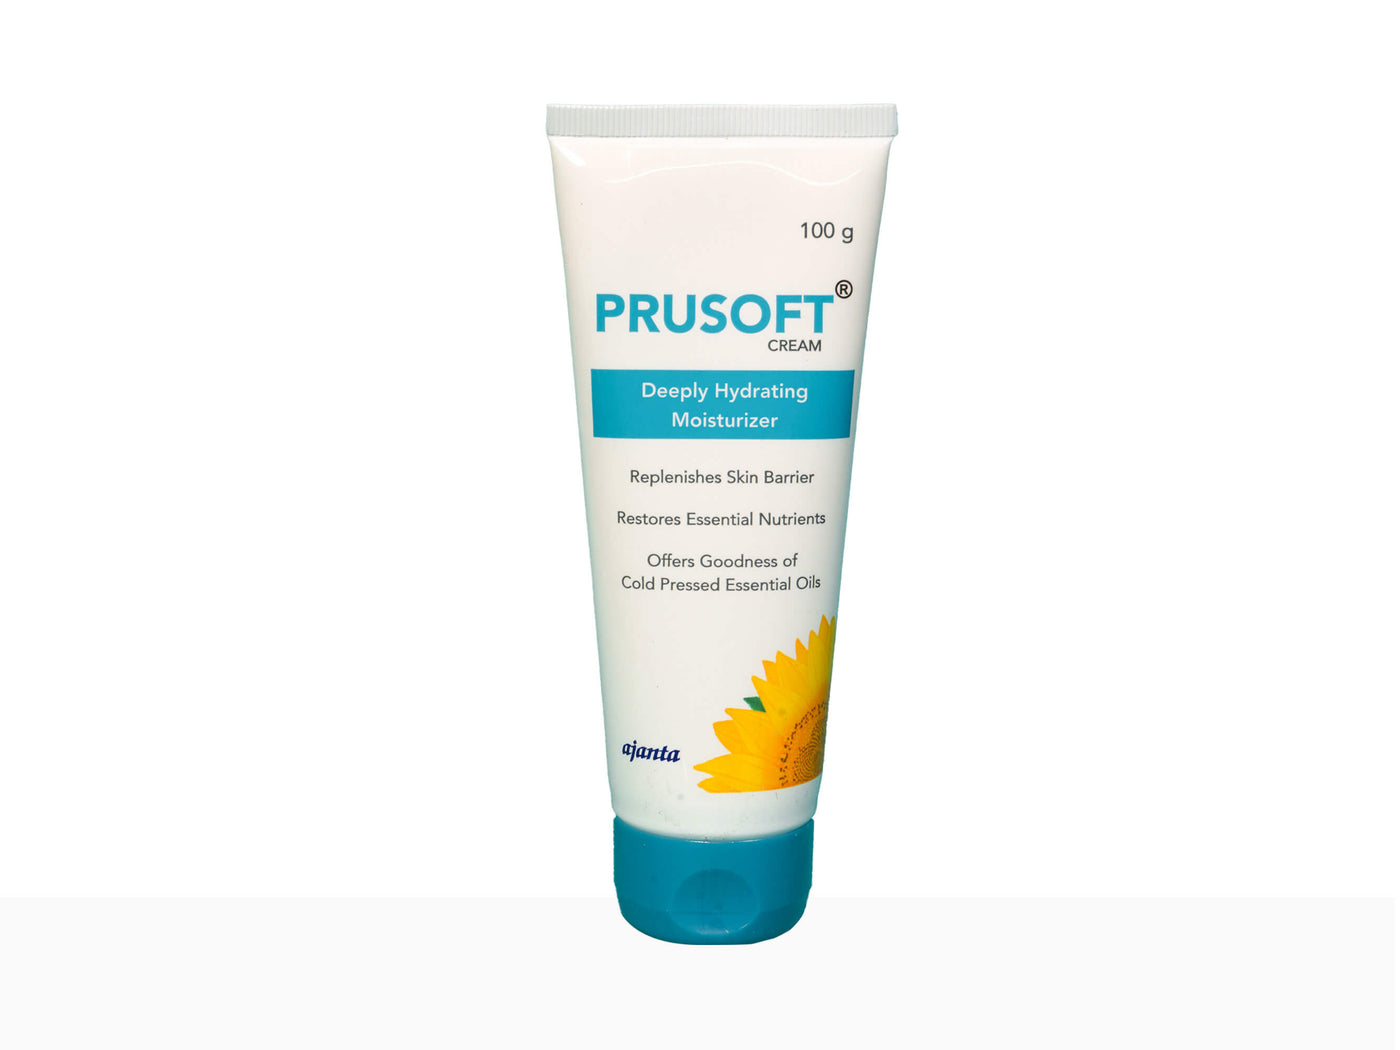 Prusoft deeply hydrating moisturzer cream - Clinikally